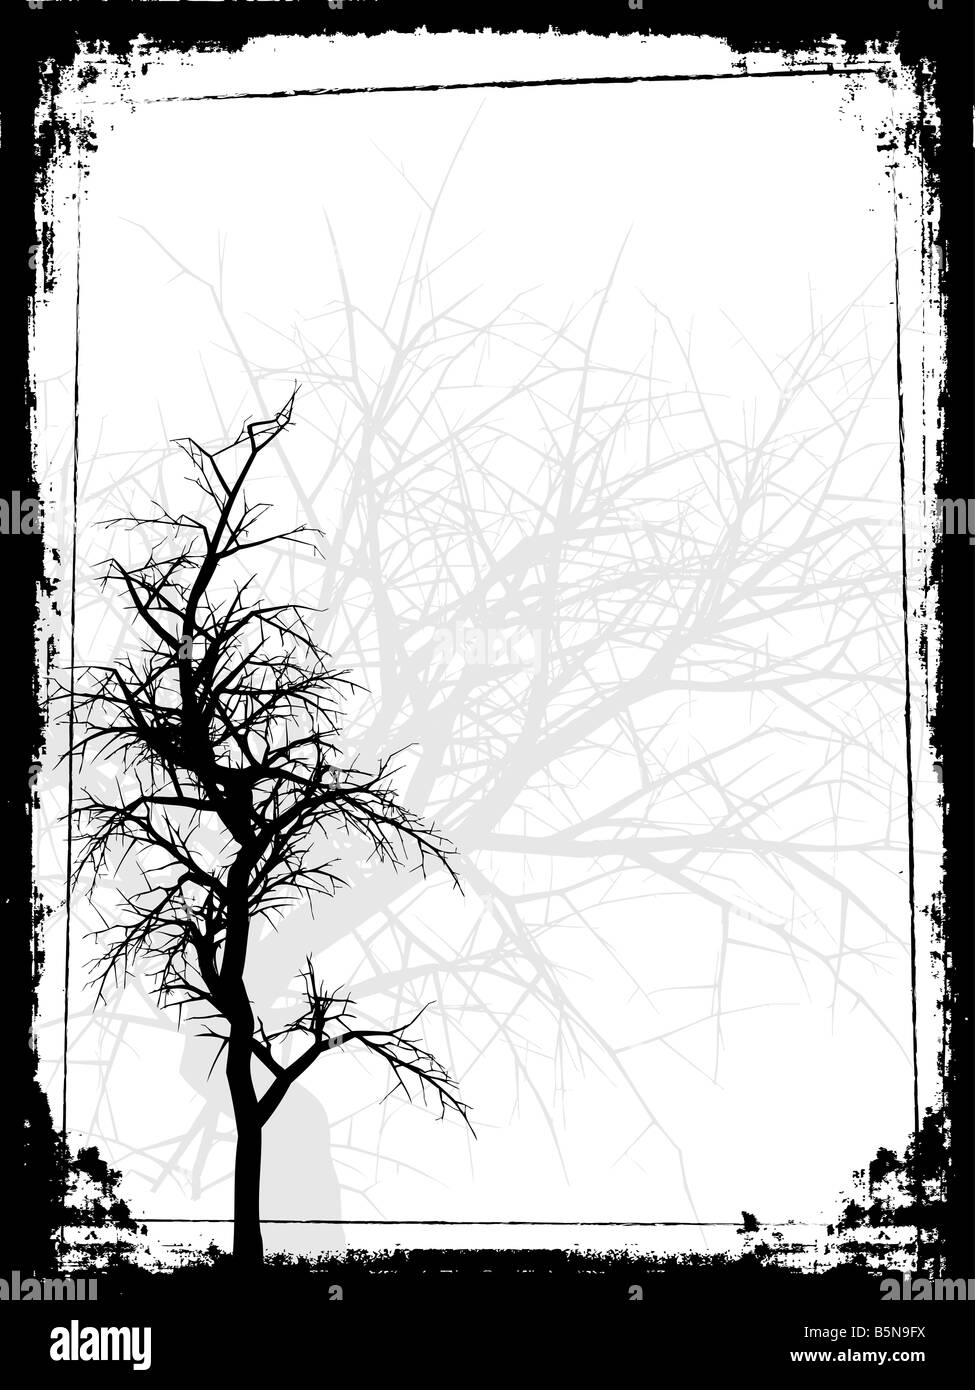 Grunge trees Stock Photo